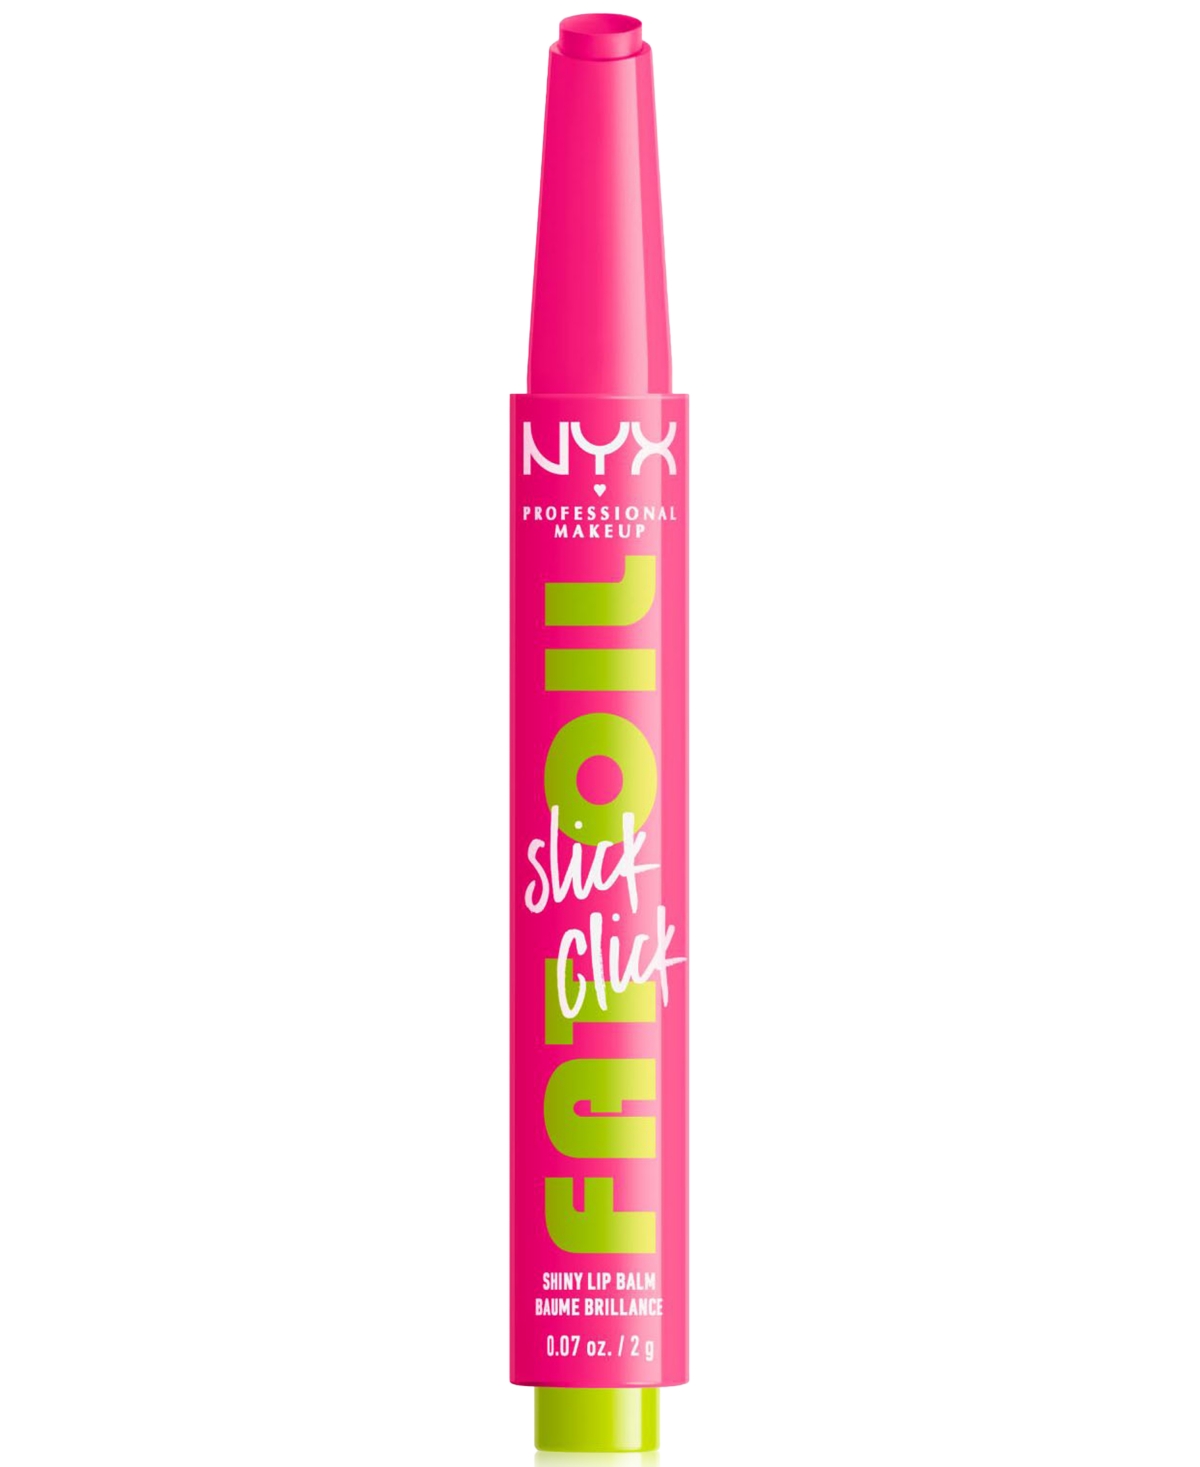 Nyx Professional Makeup Fat Oil Slick Click In Thriving (flamingo Pink)